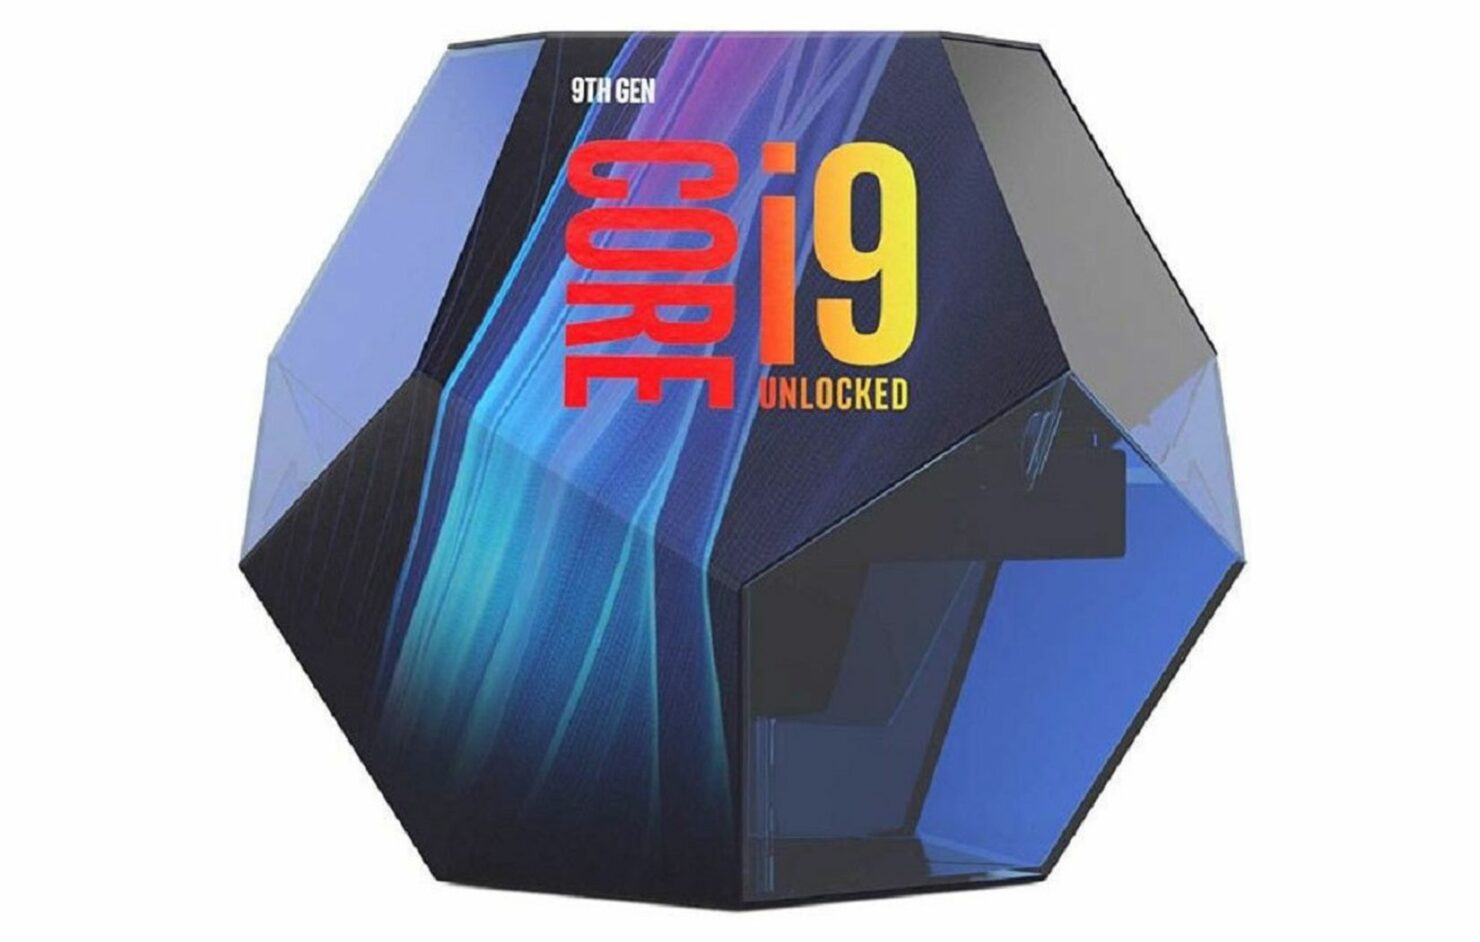 intel Core i9 13900K BOX